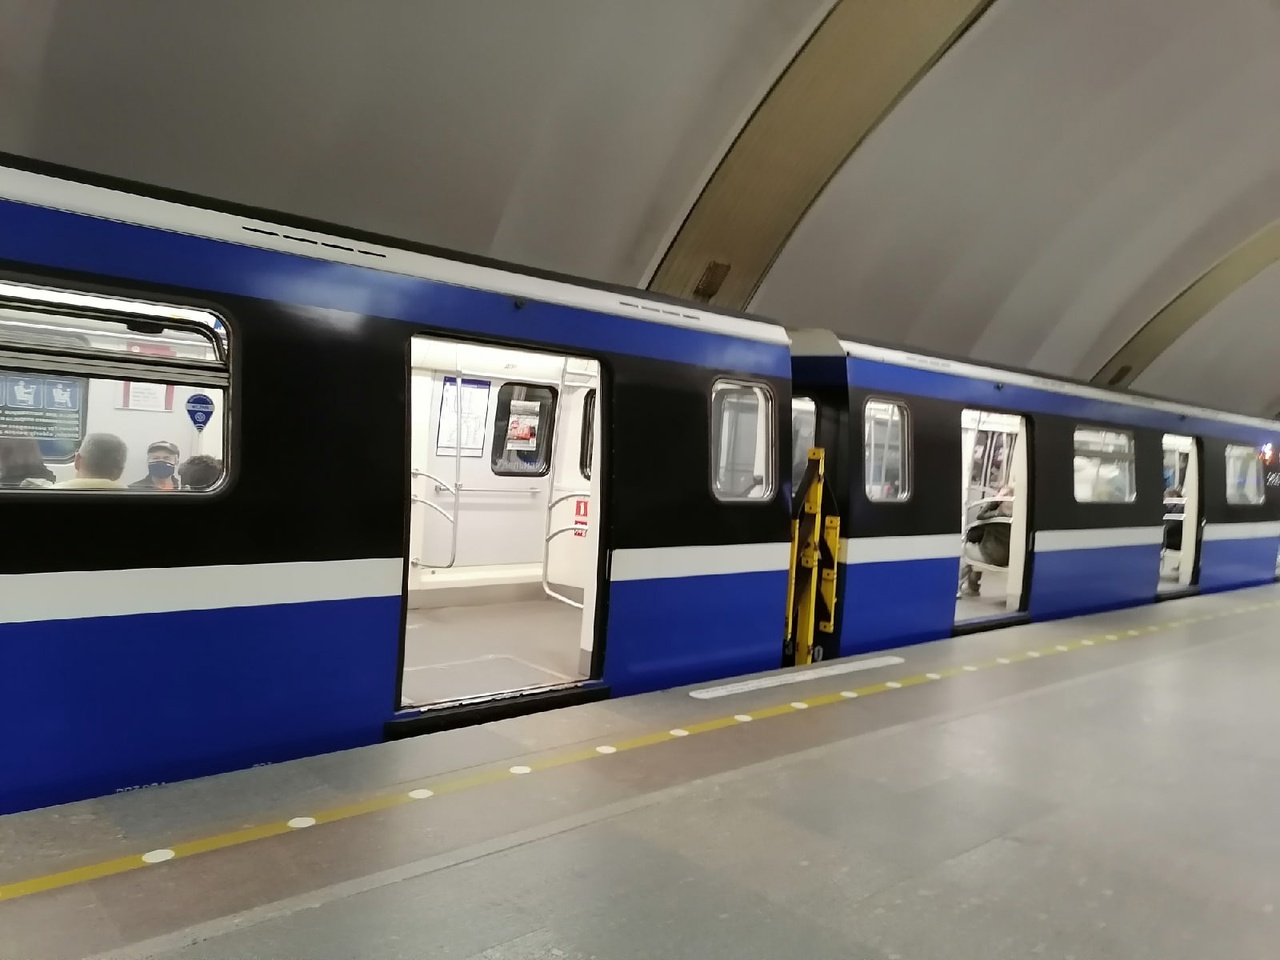 вагоны метро санкт петербурга